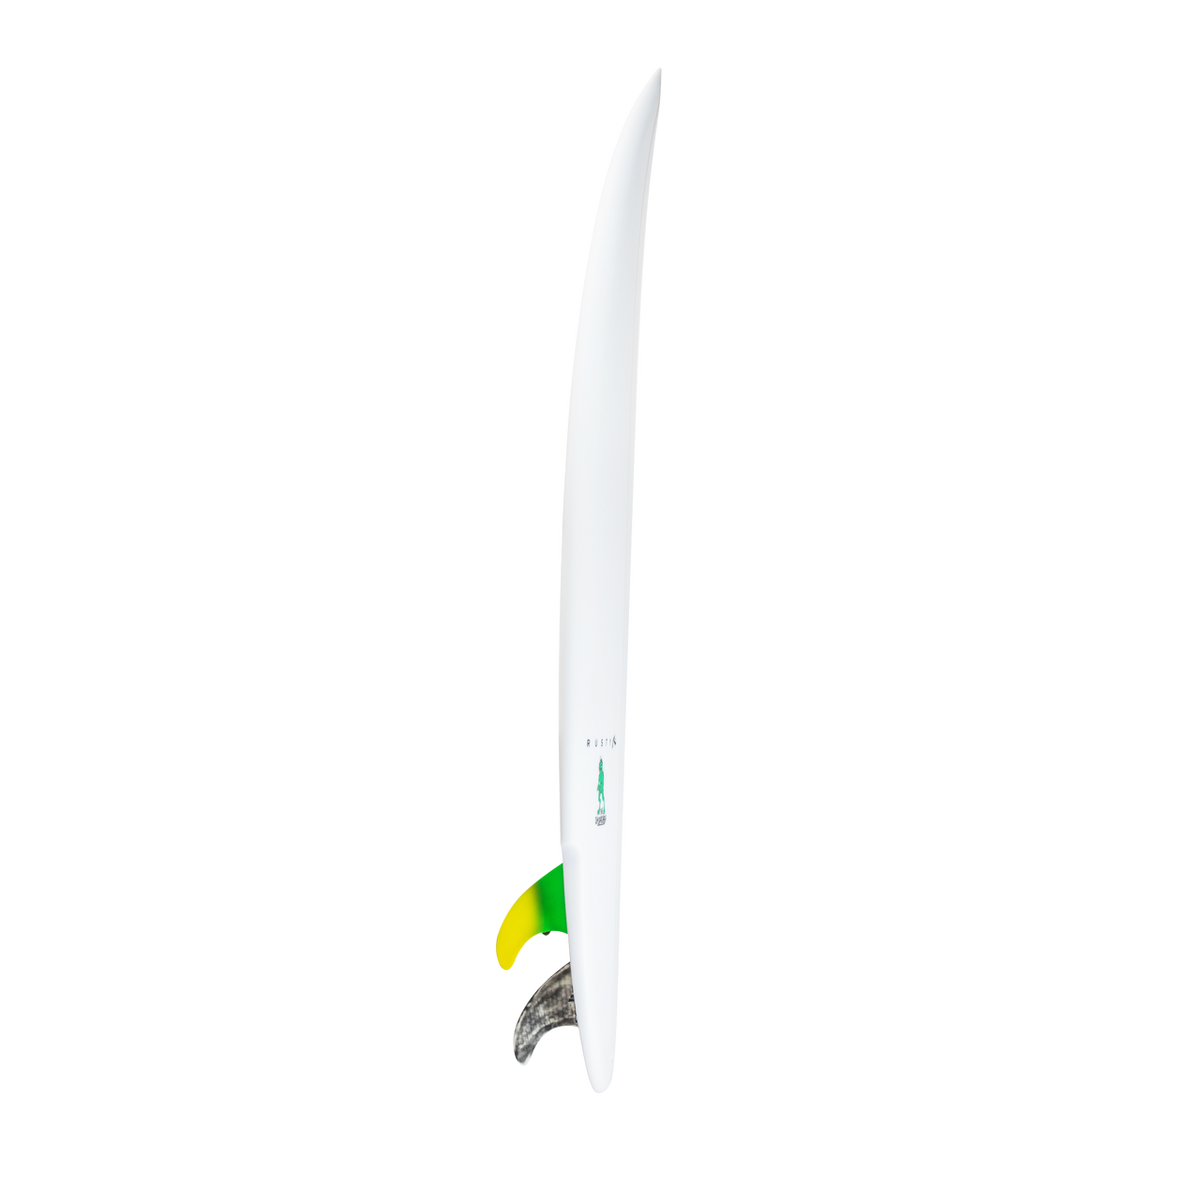 Chupacabra - High Performance Shortboard - Rusty Surfboards - Rail View